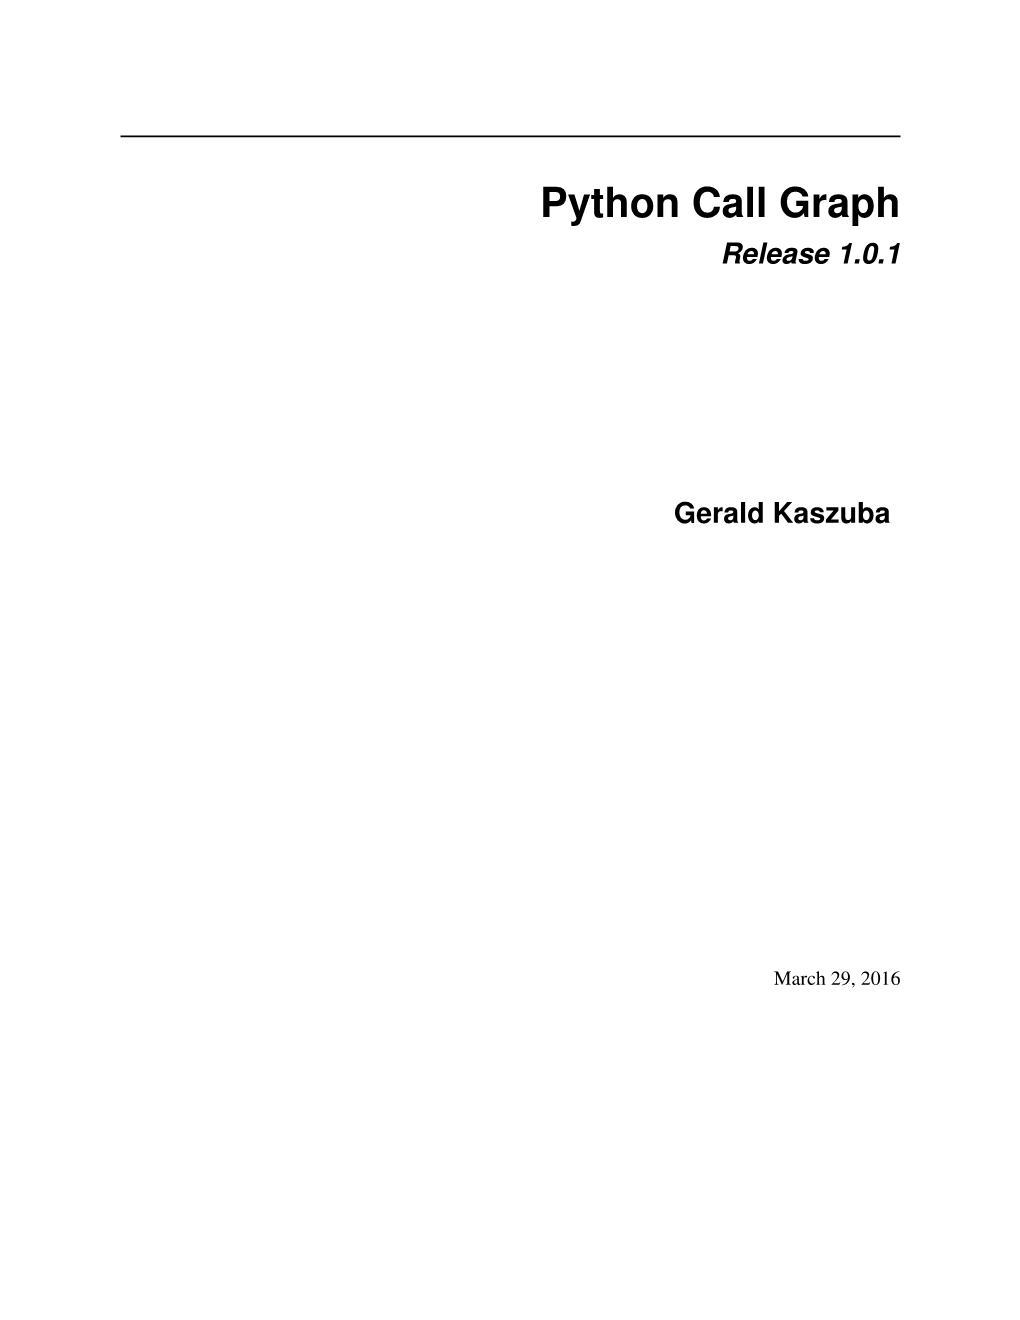 Python Call Graph Release 1.0.1